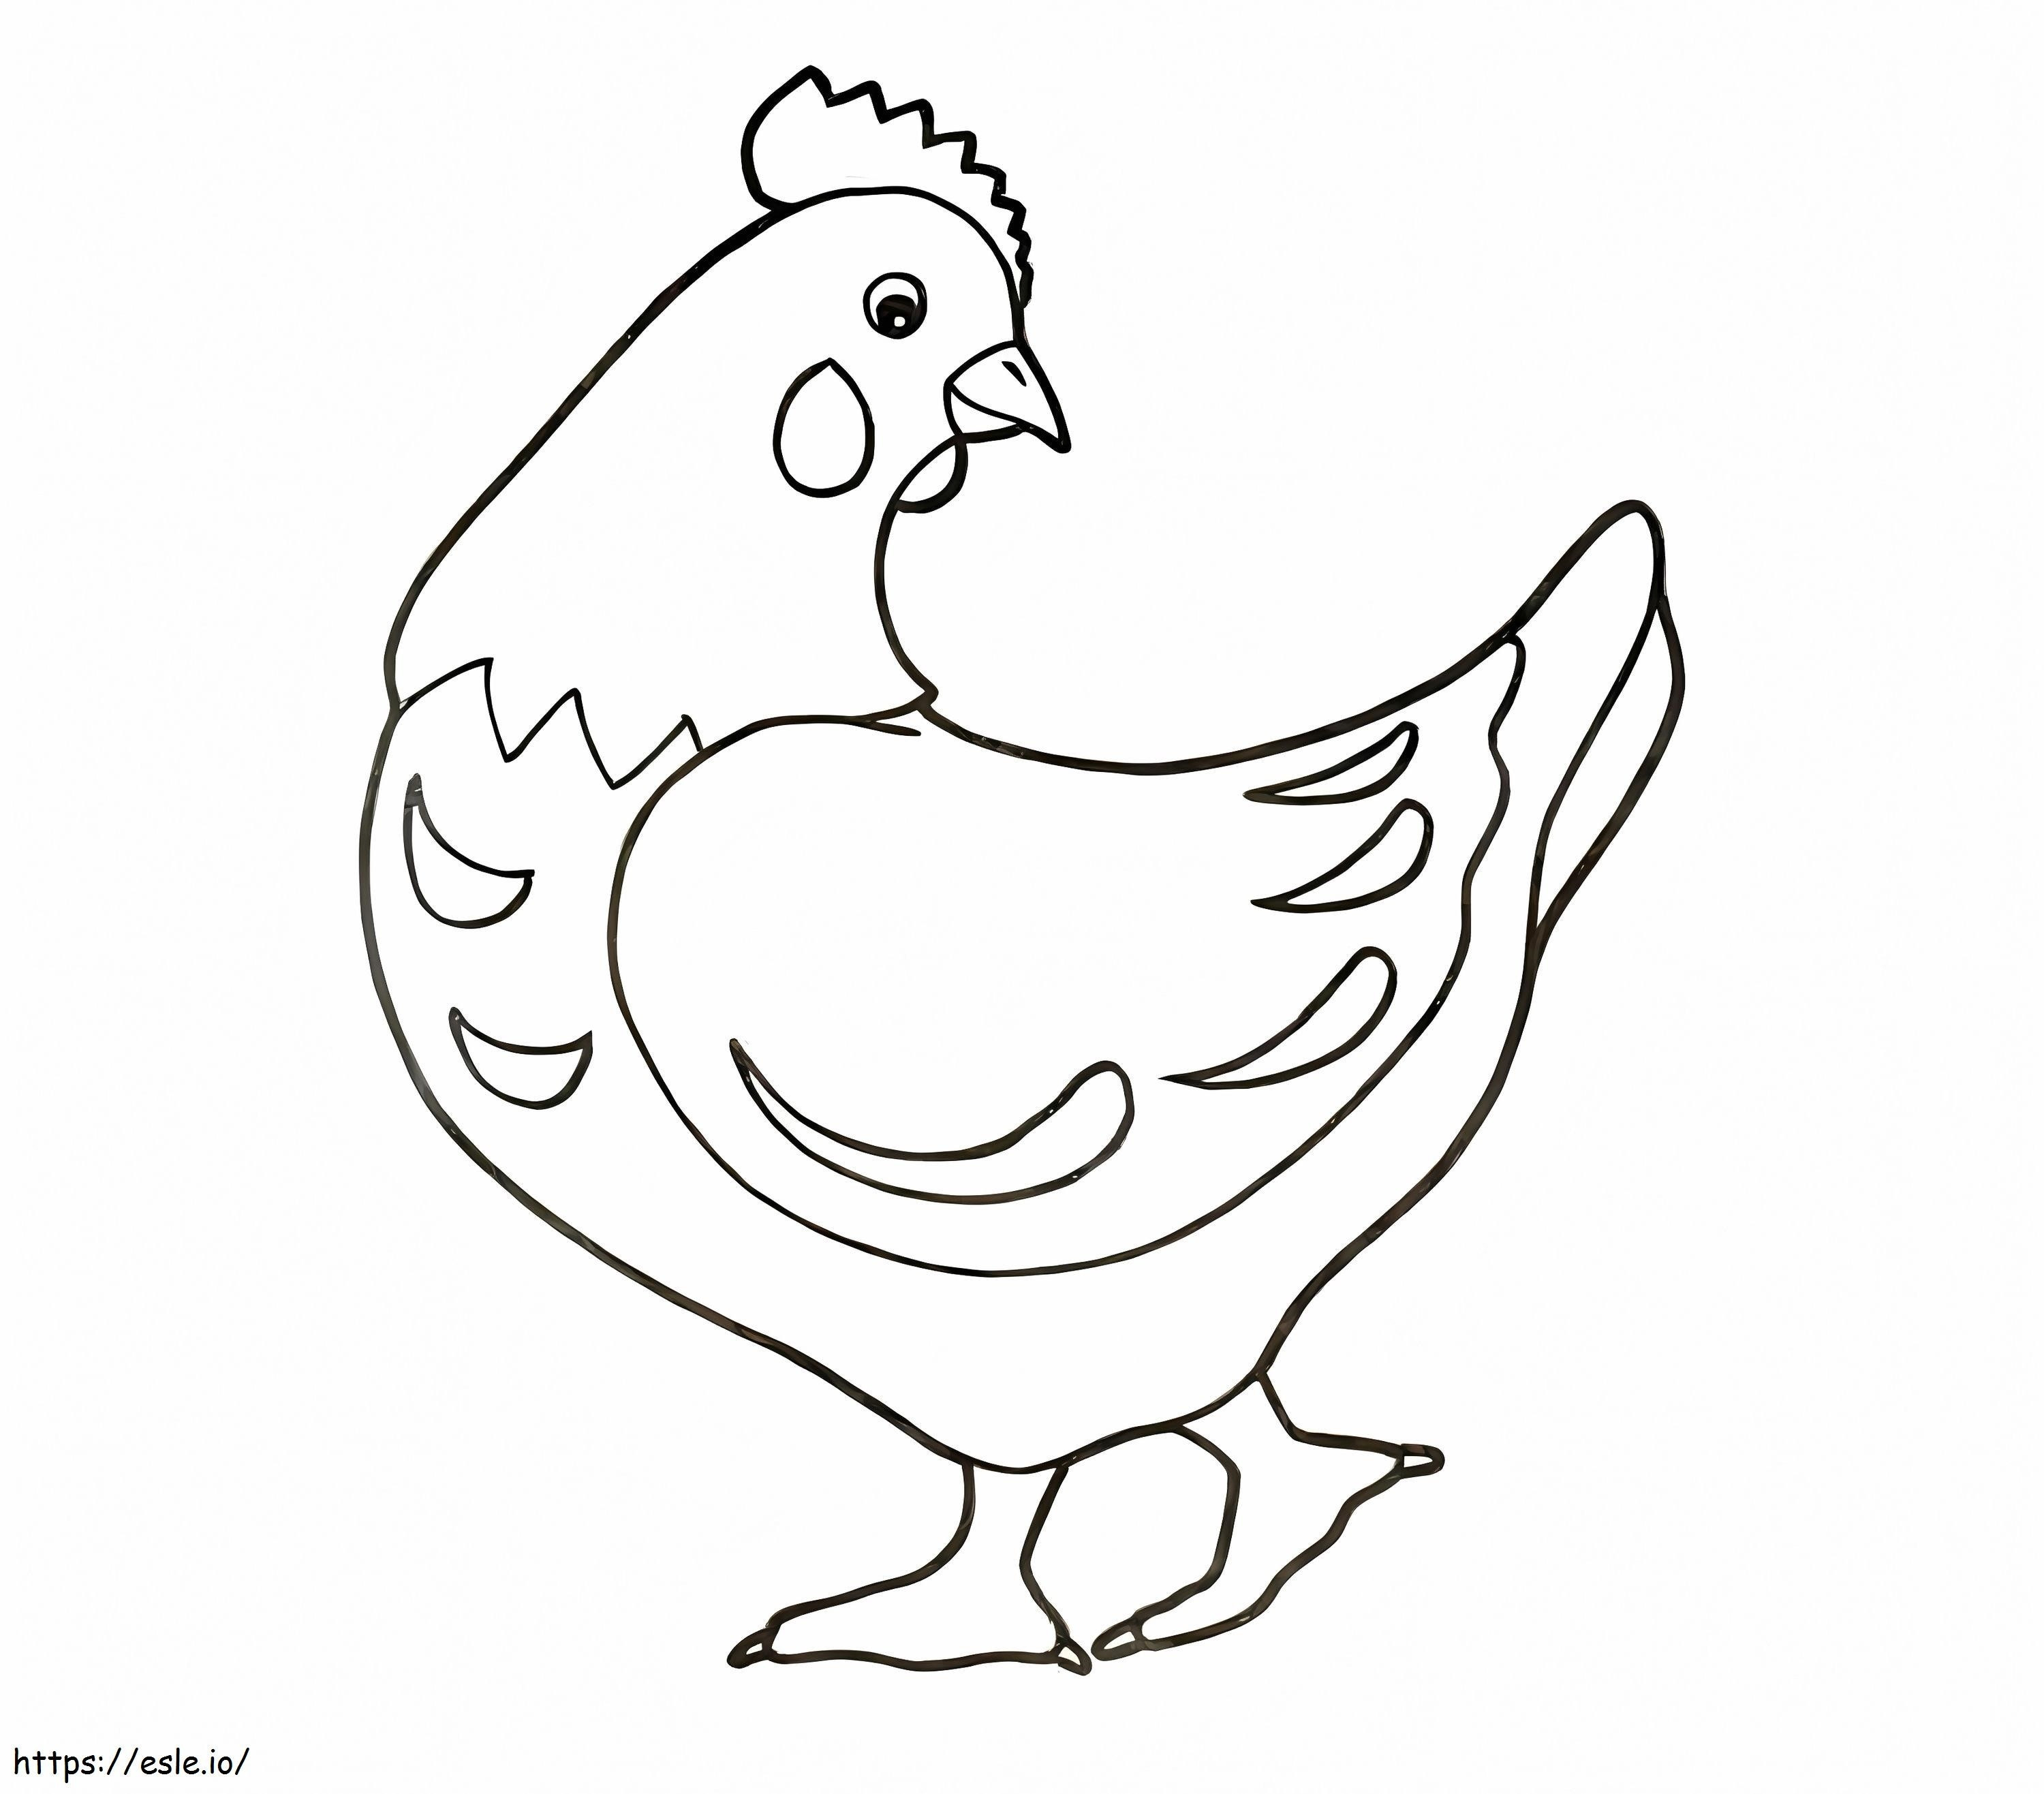 Normales Huhn ausmalbilder